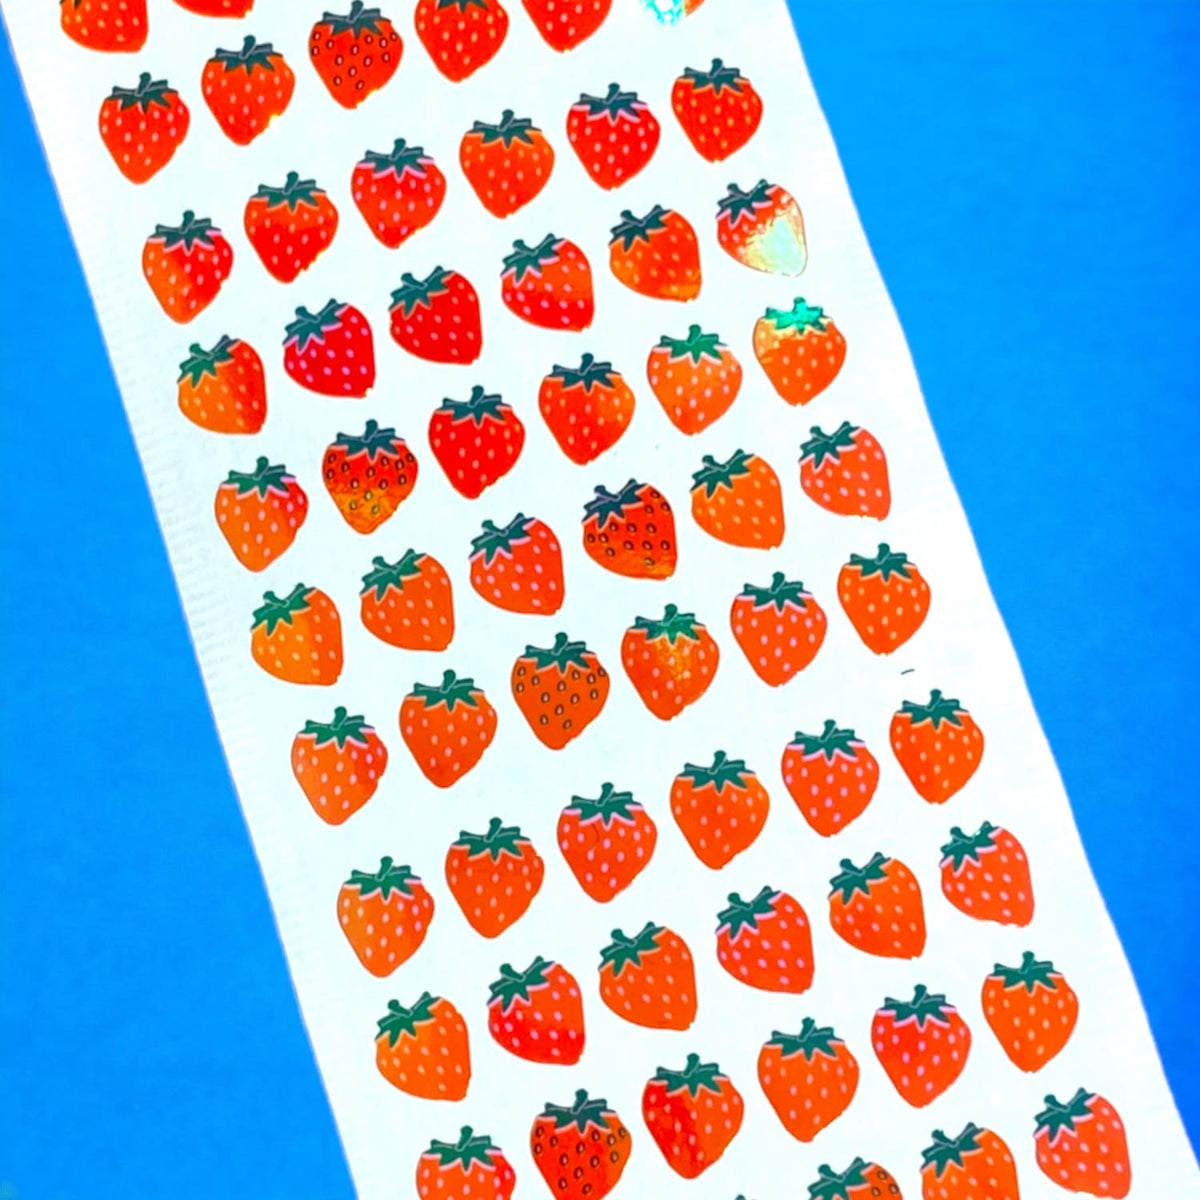 Kawaii Paper Sticker Sheet Back To School - Decorative